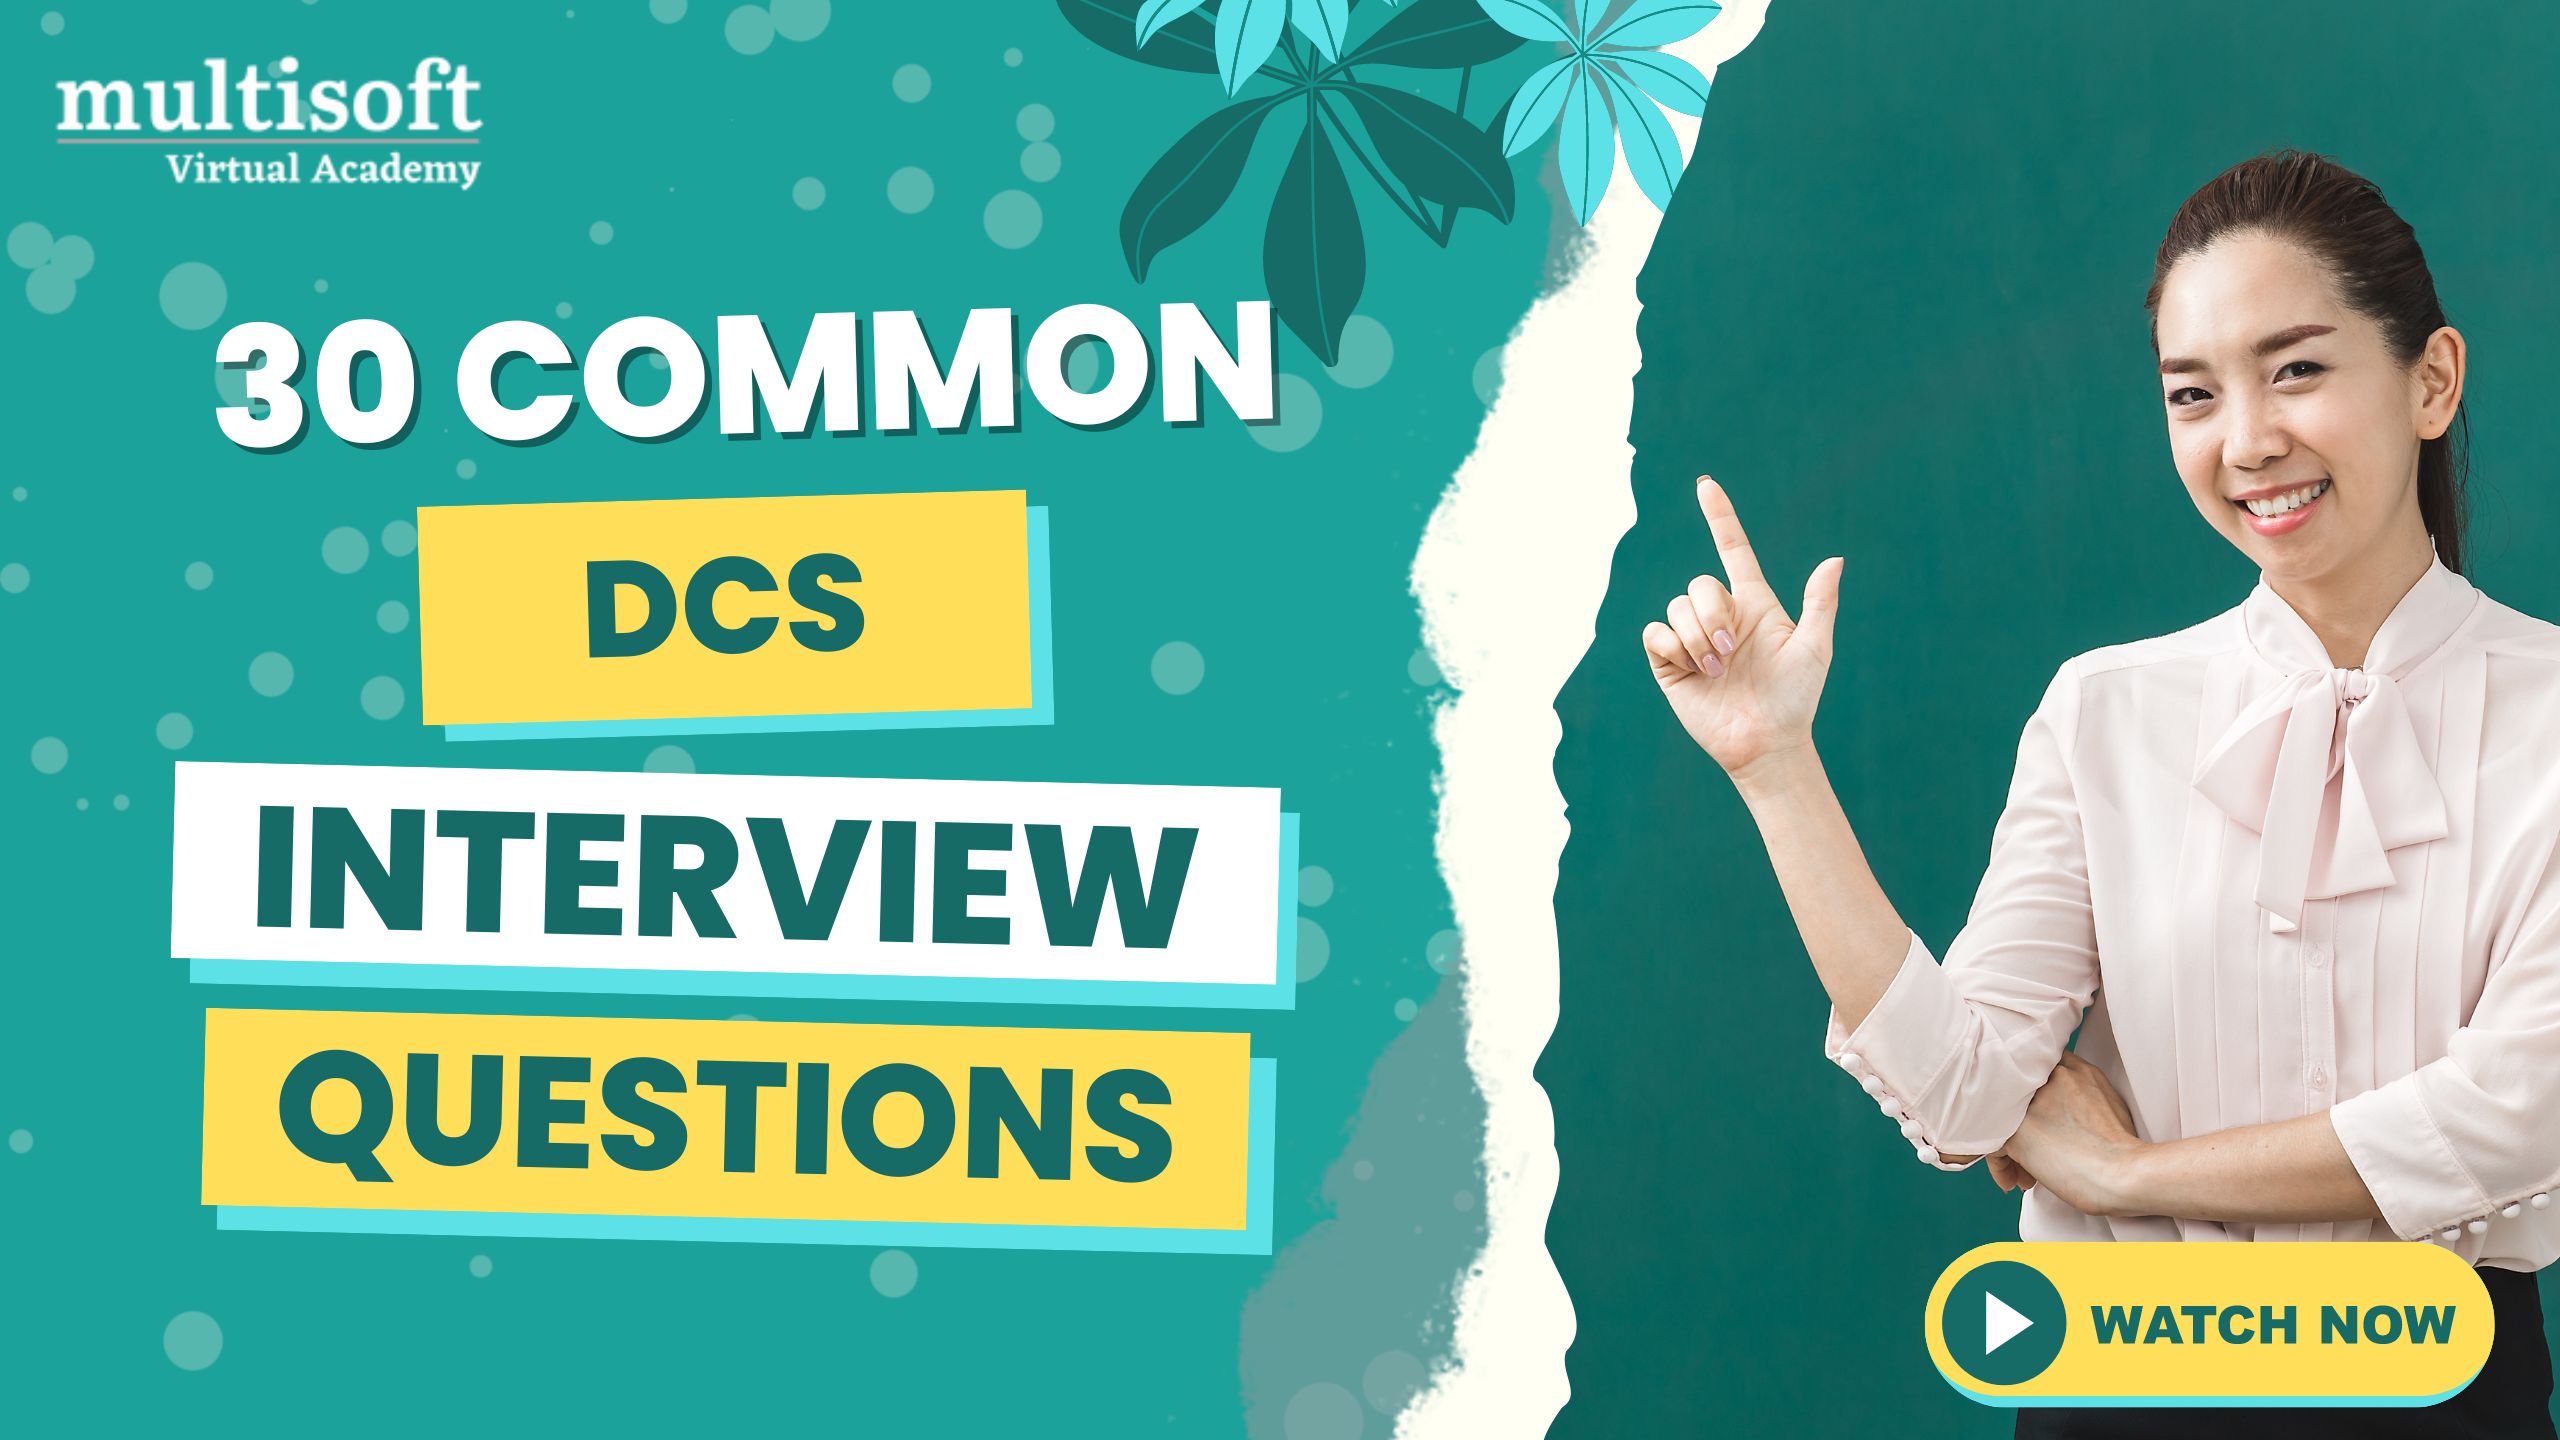 DCS Interview Questions